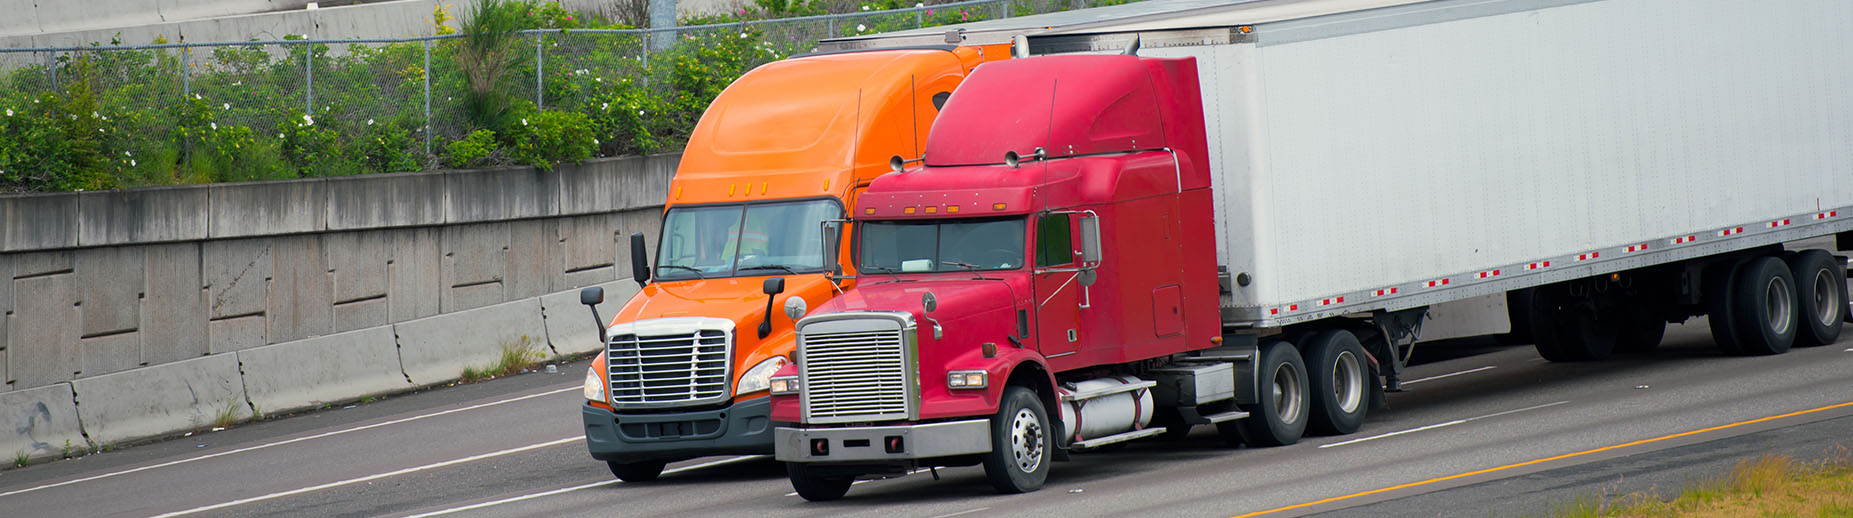 Madonna Trucking Services, Logistics Services and Transportation Logistics